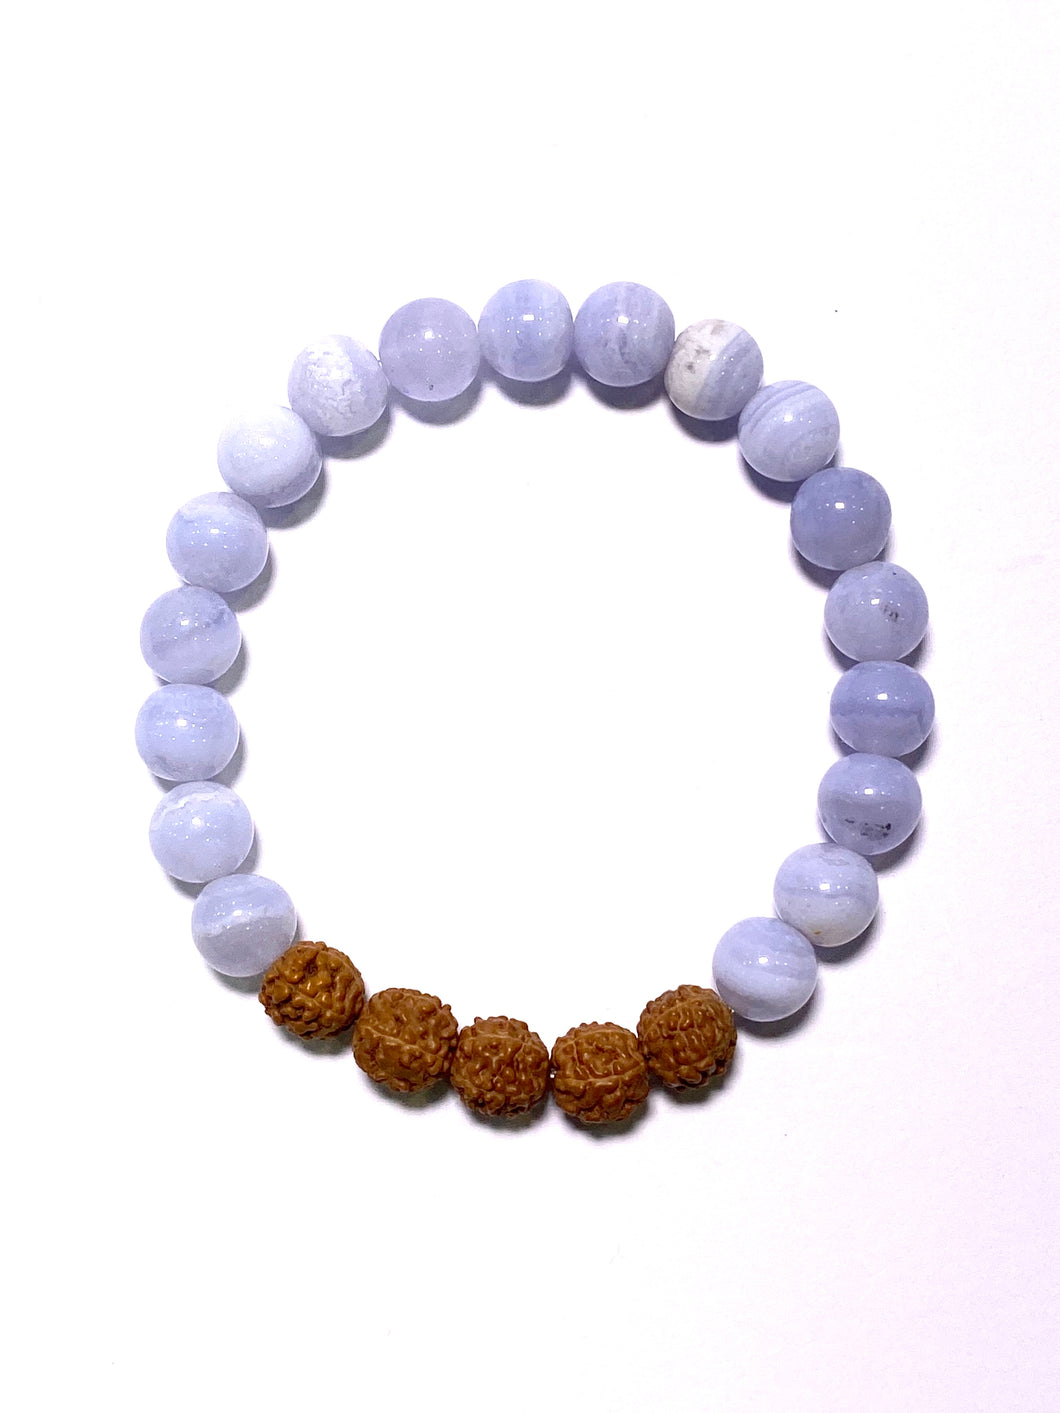 blue-lace-agate-gemstone-bracelet